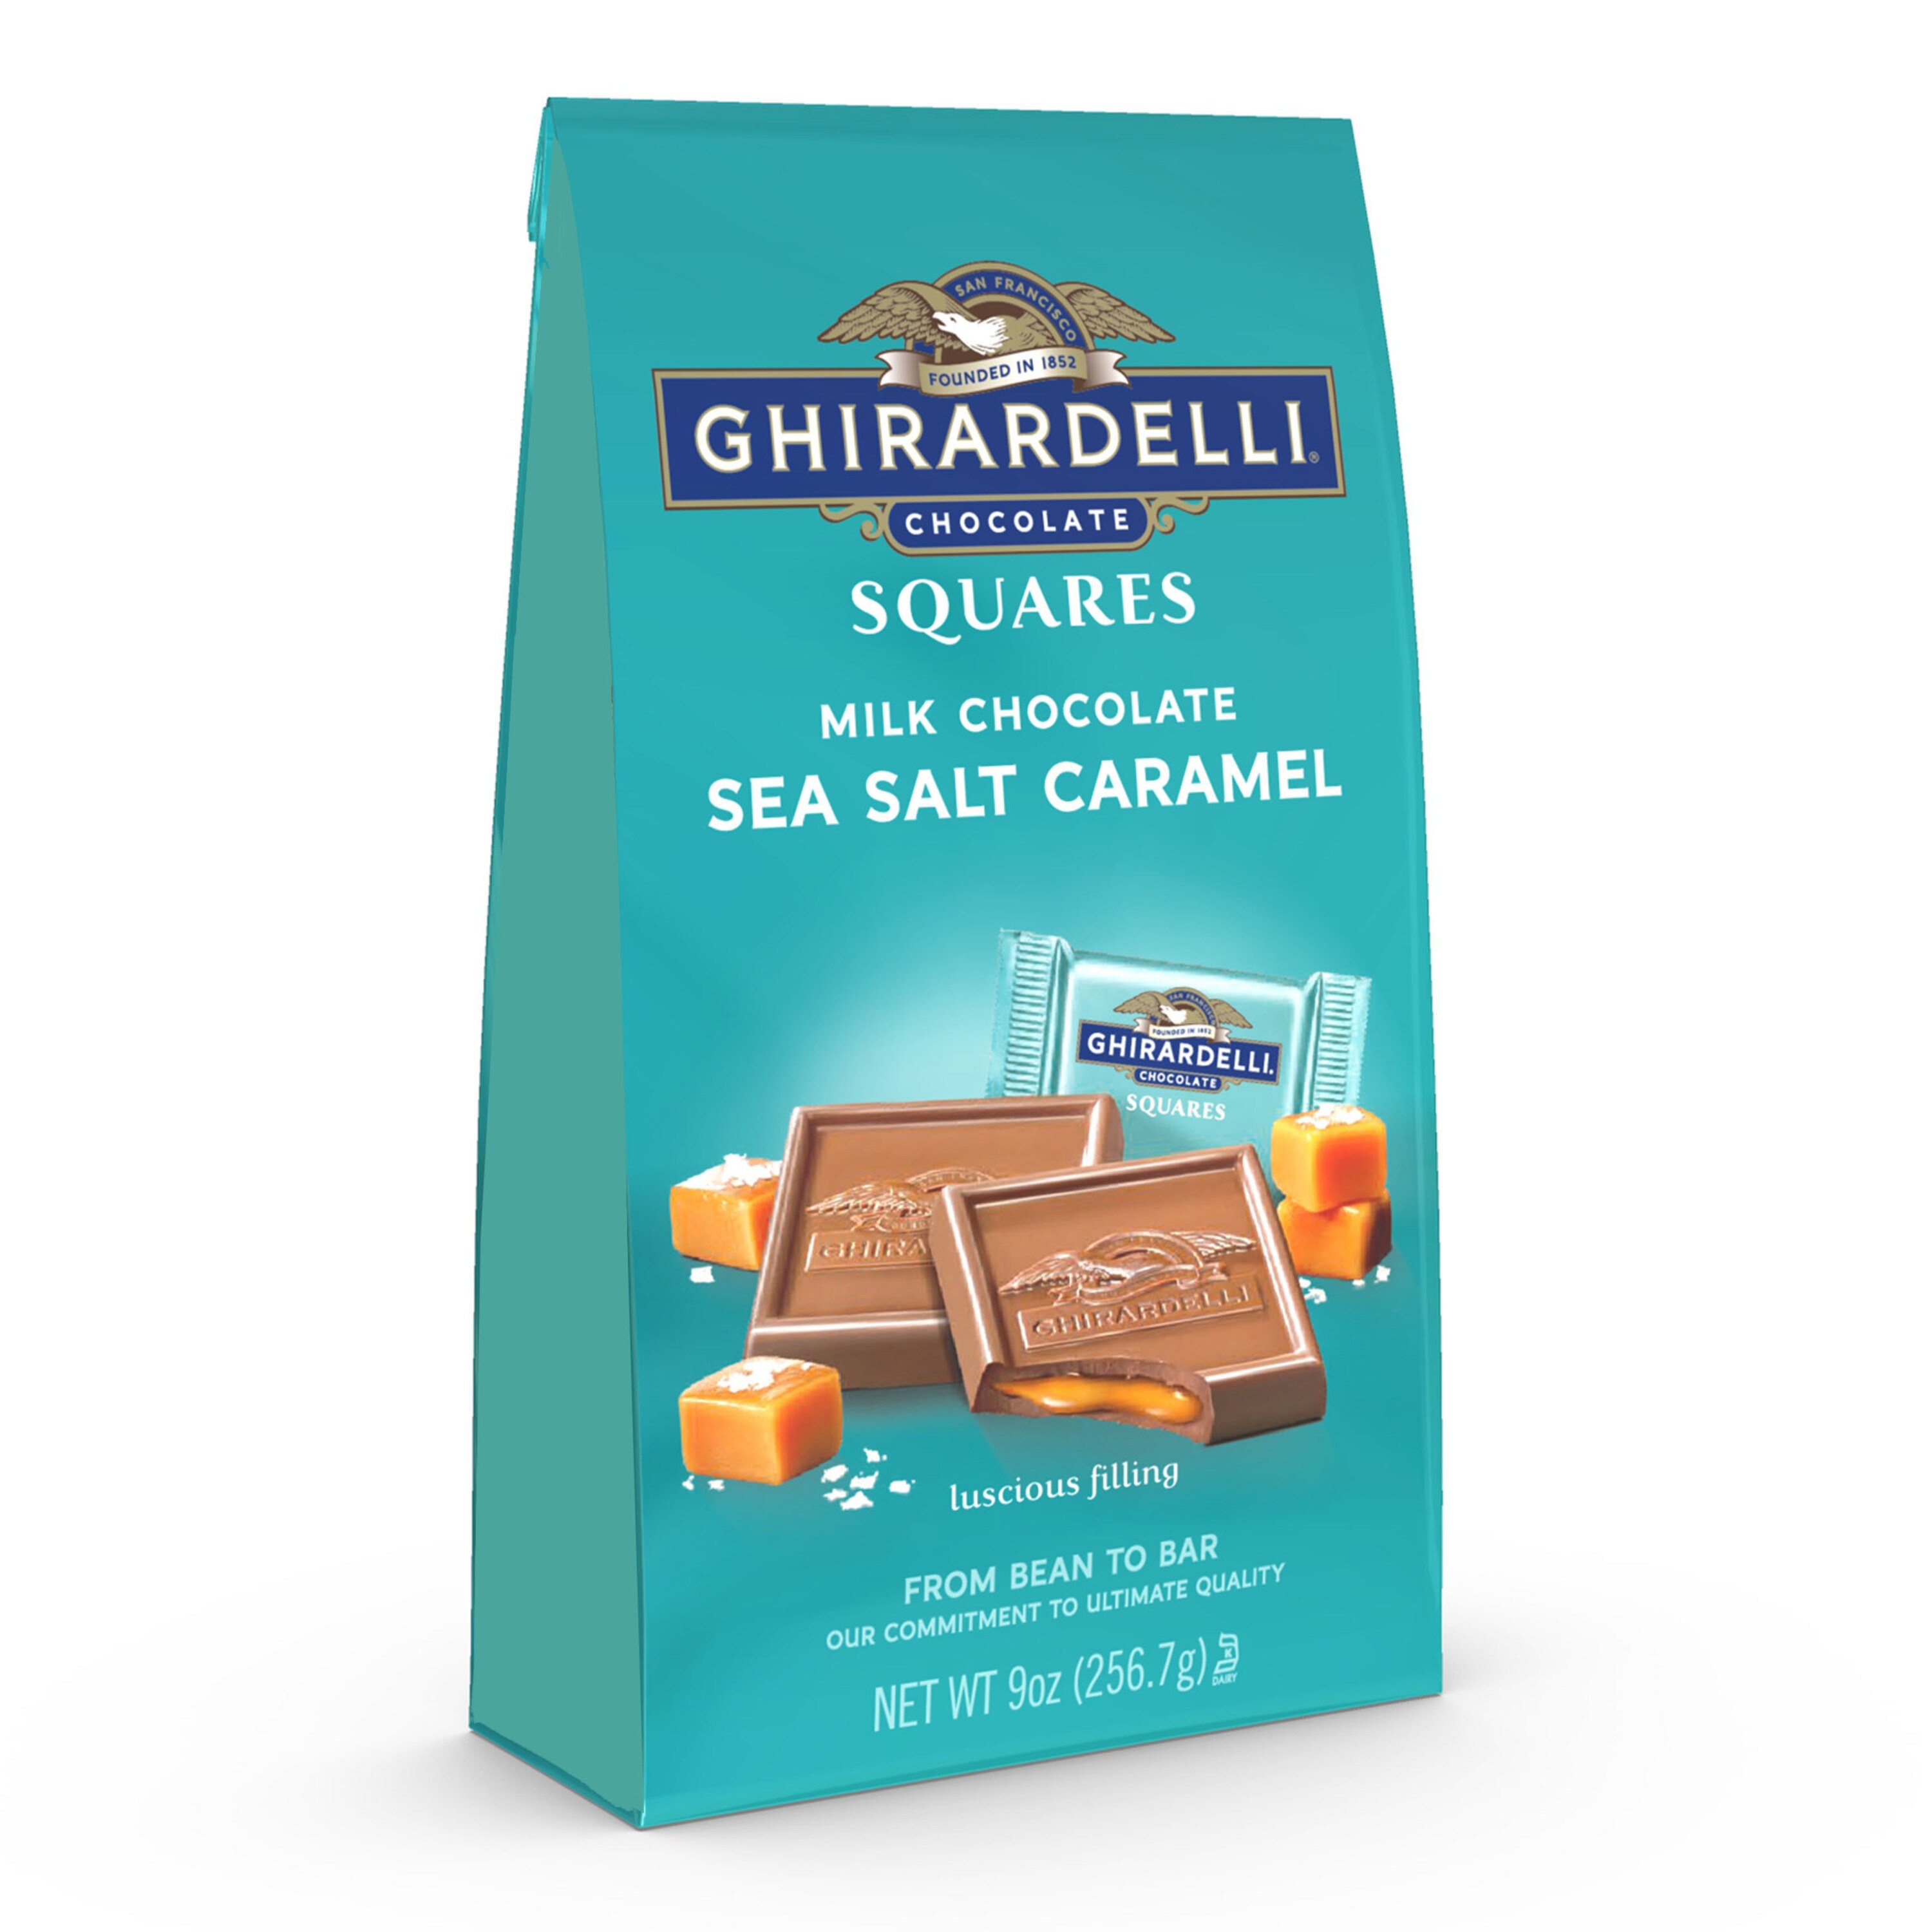 Ghirardelli, Milk Chocolate Sea Salt Caramel Chocolate Squares, 9 oz Bag